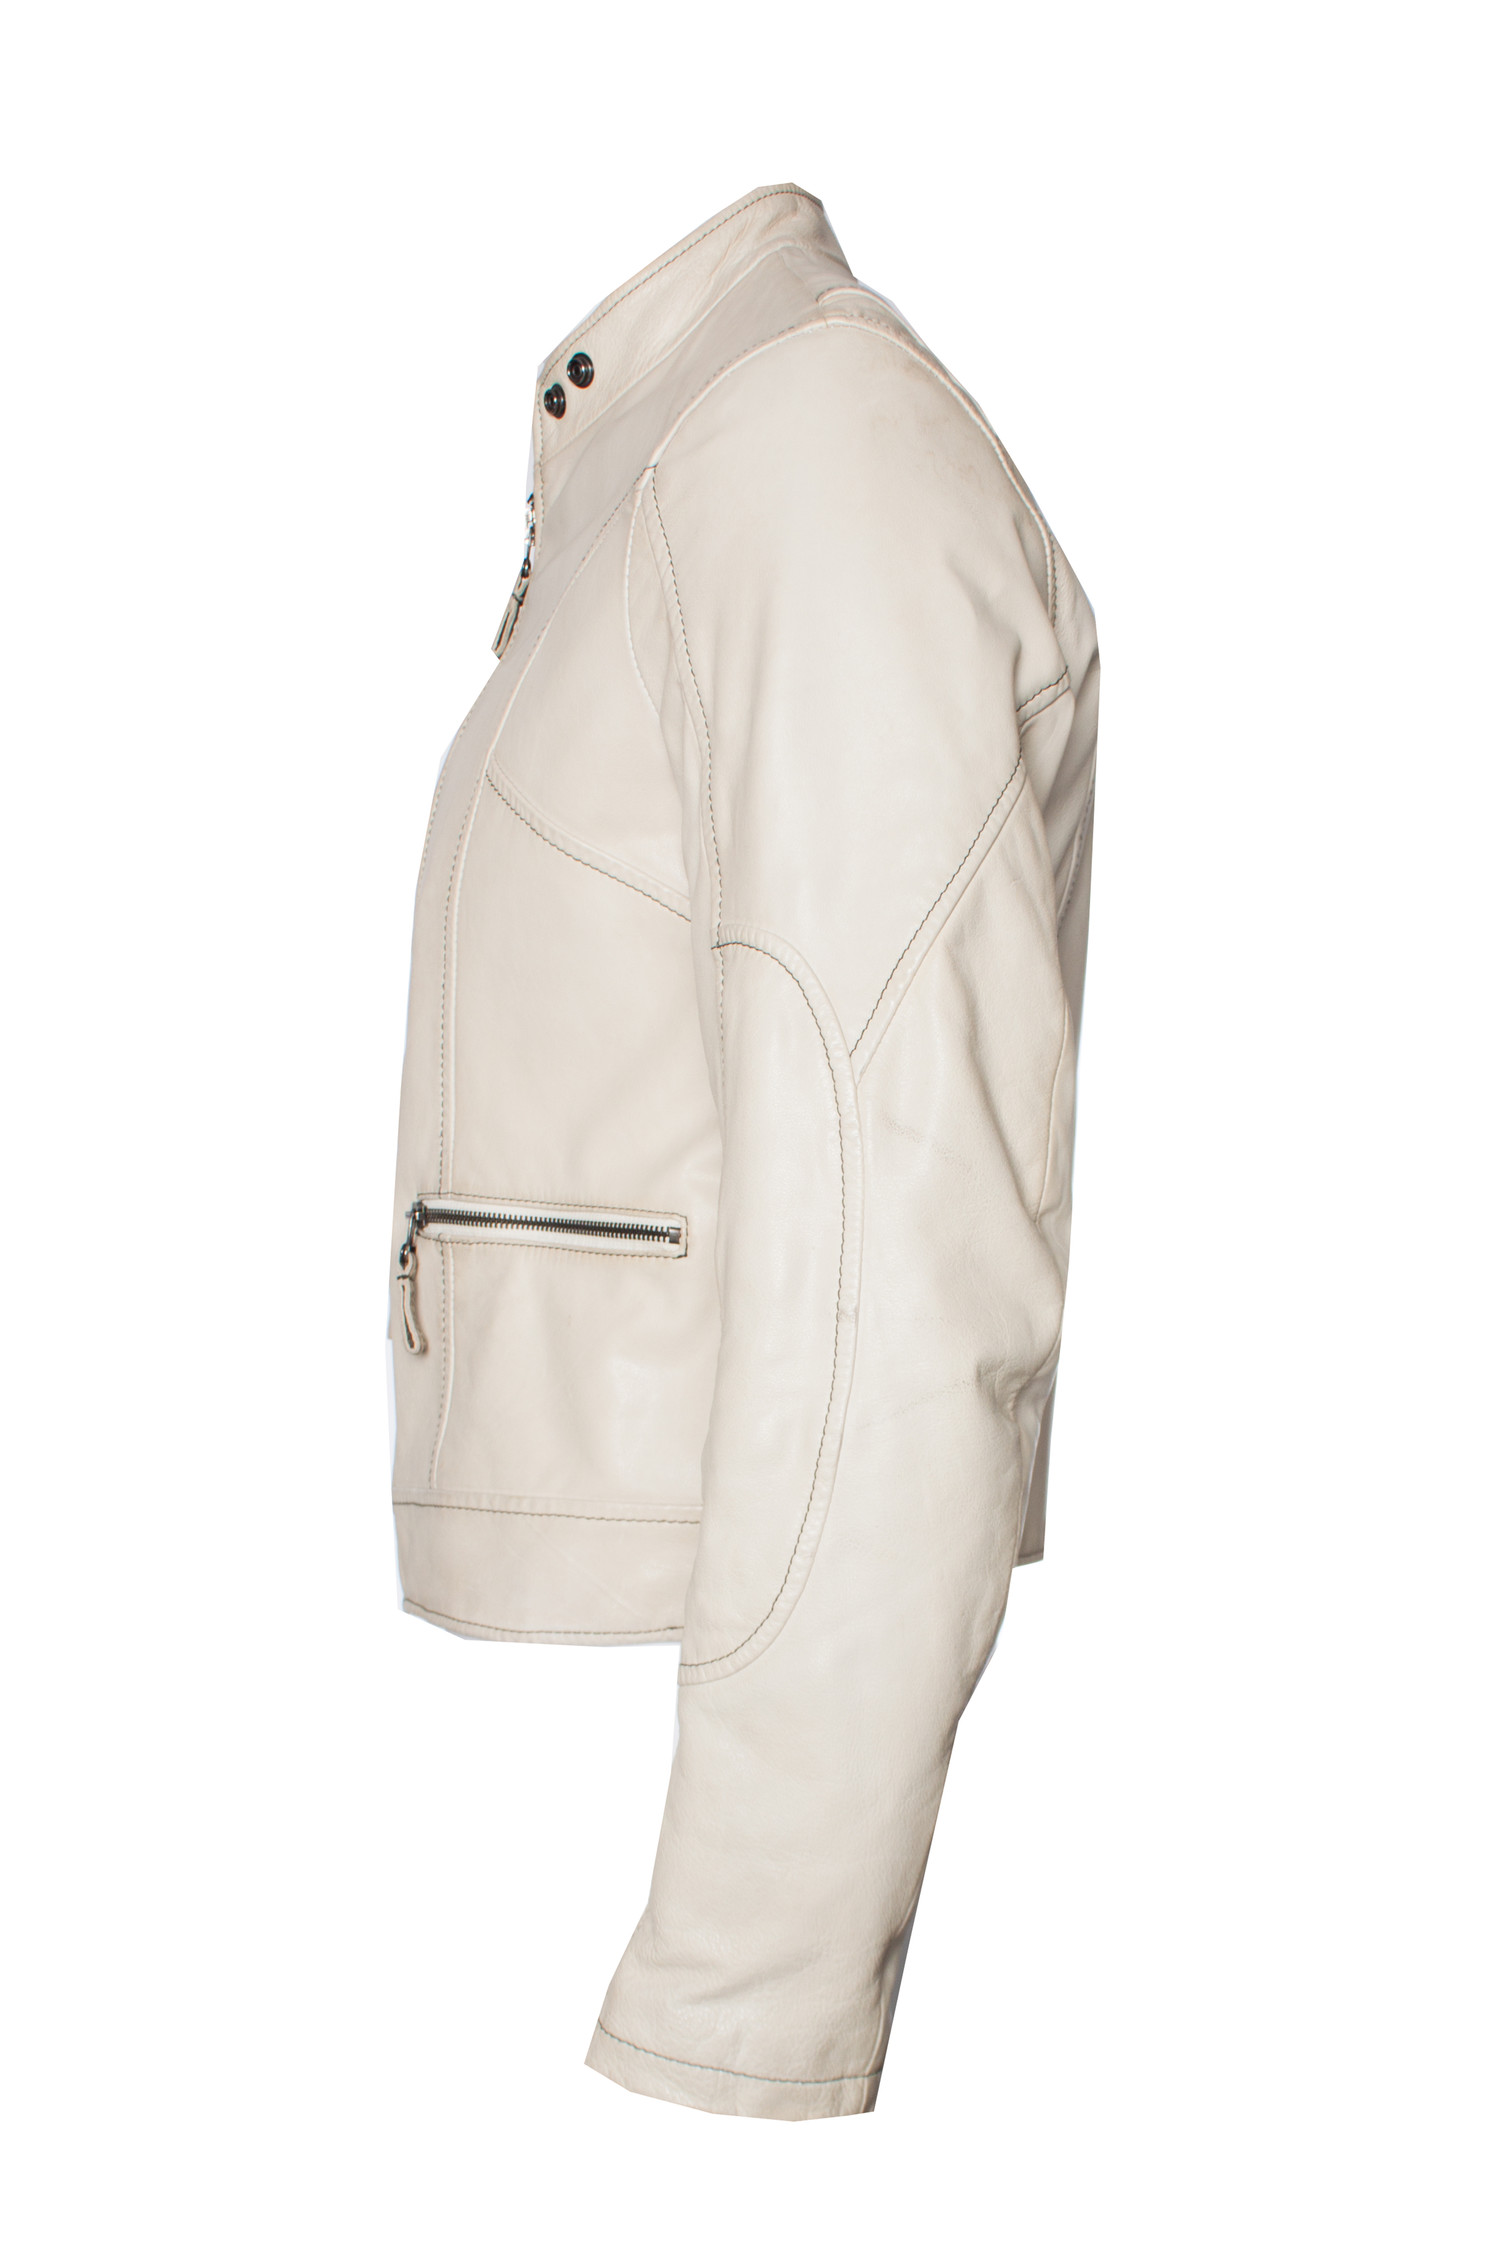 Armani Jeans, off-white leather jacket in size I48/M. - Unique Designer  Pieces